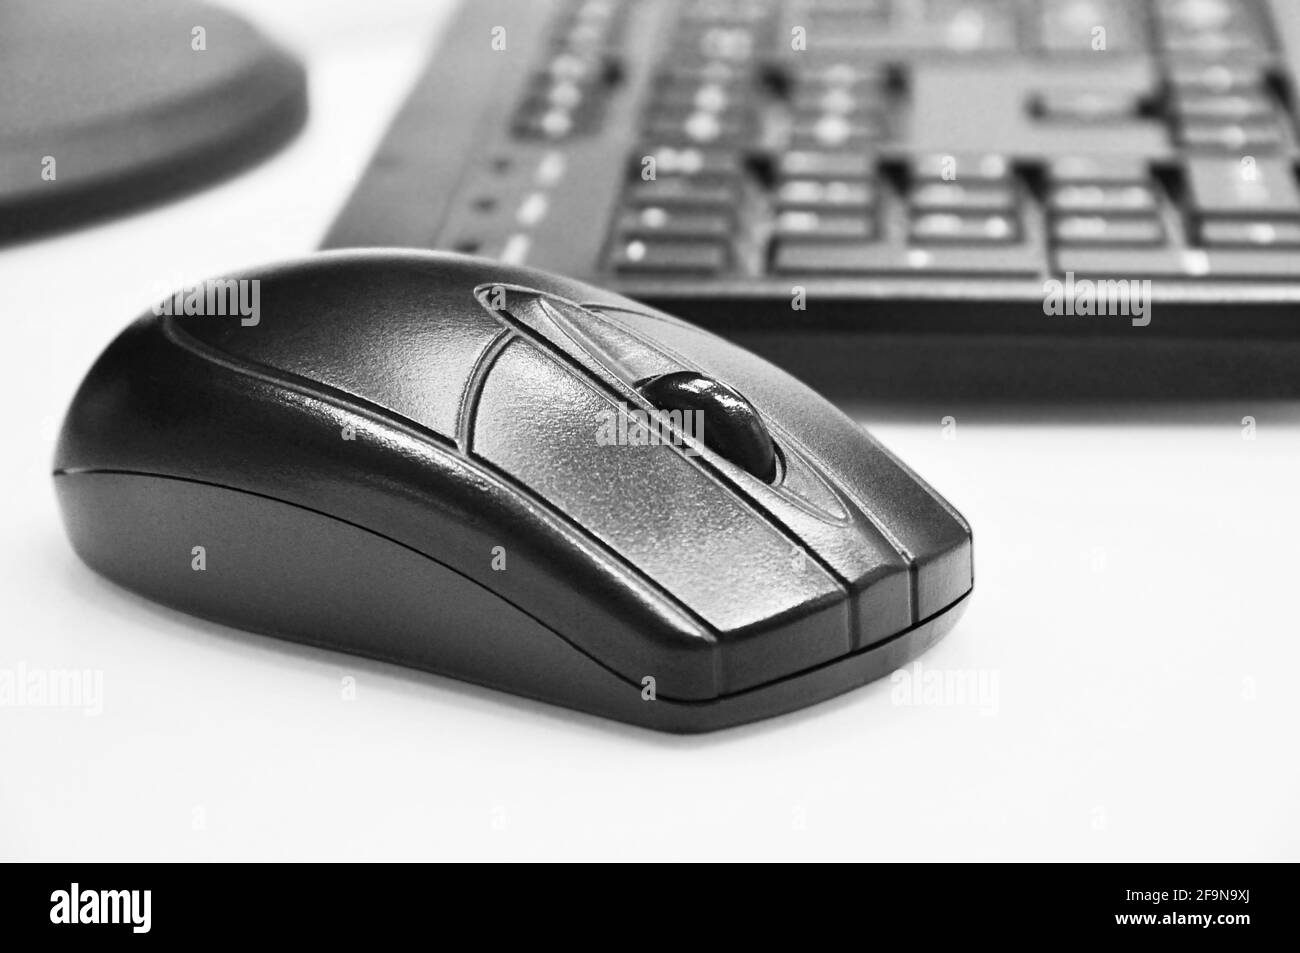 Black wireless mouse & computer keyboard on white desktop Stock Photo